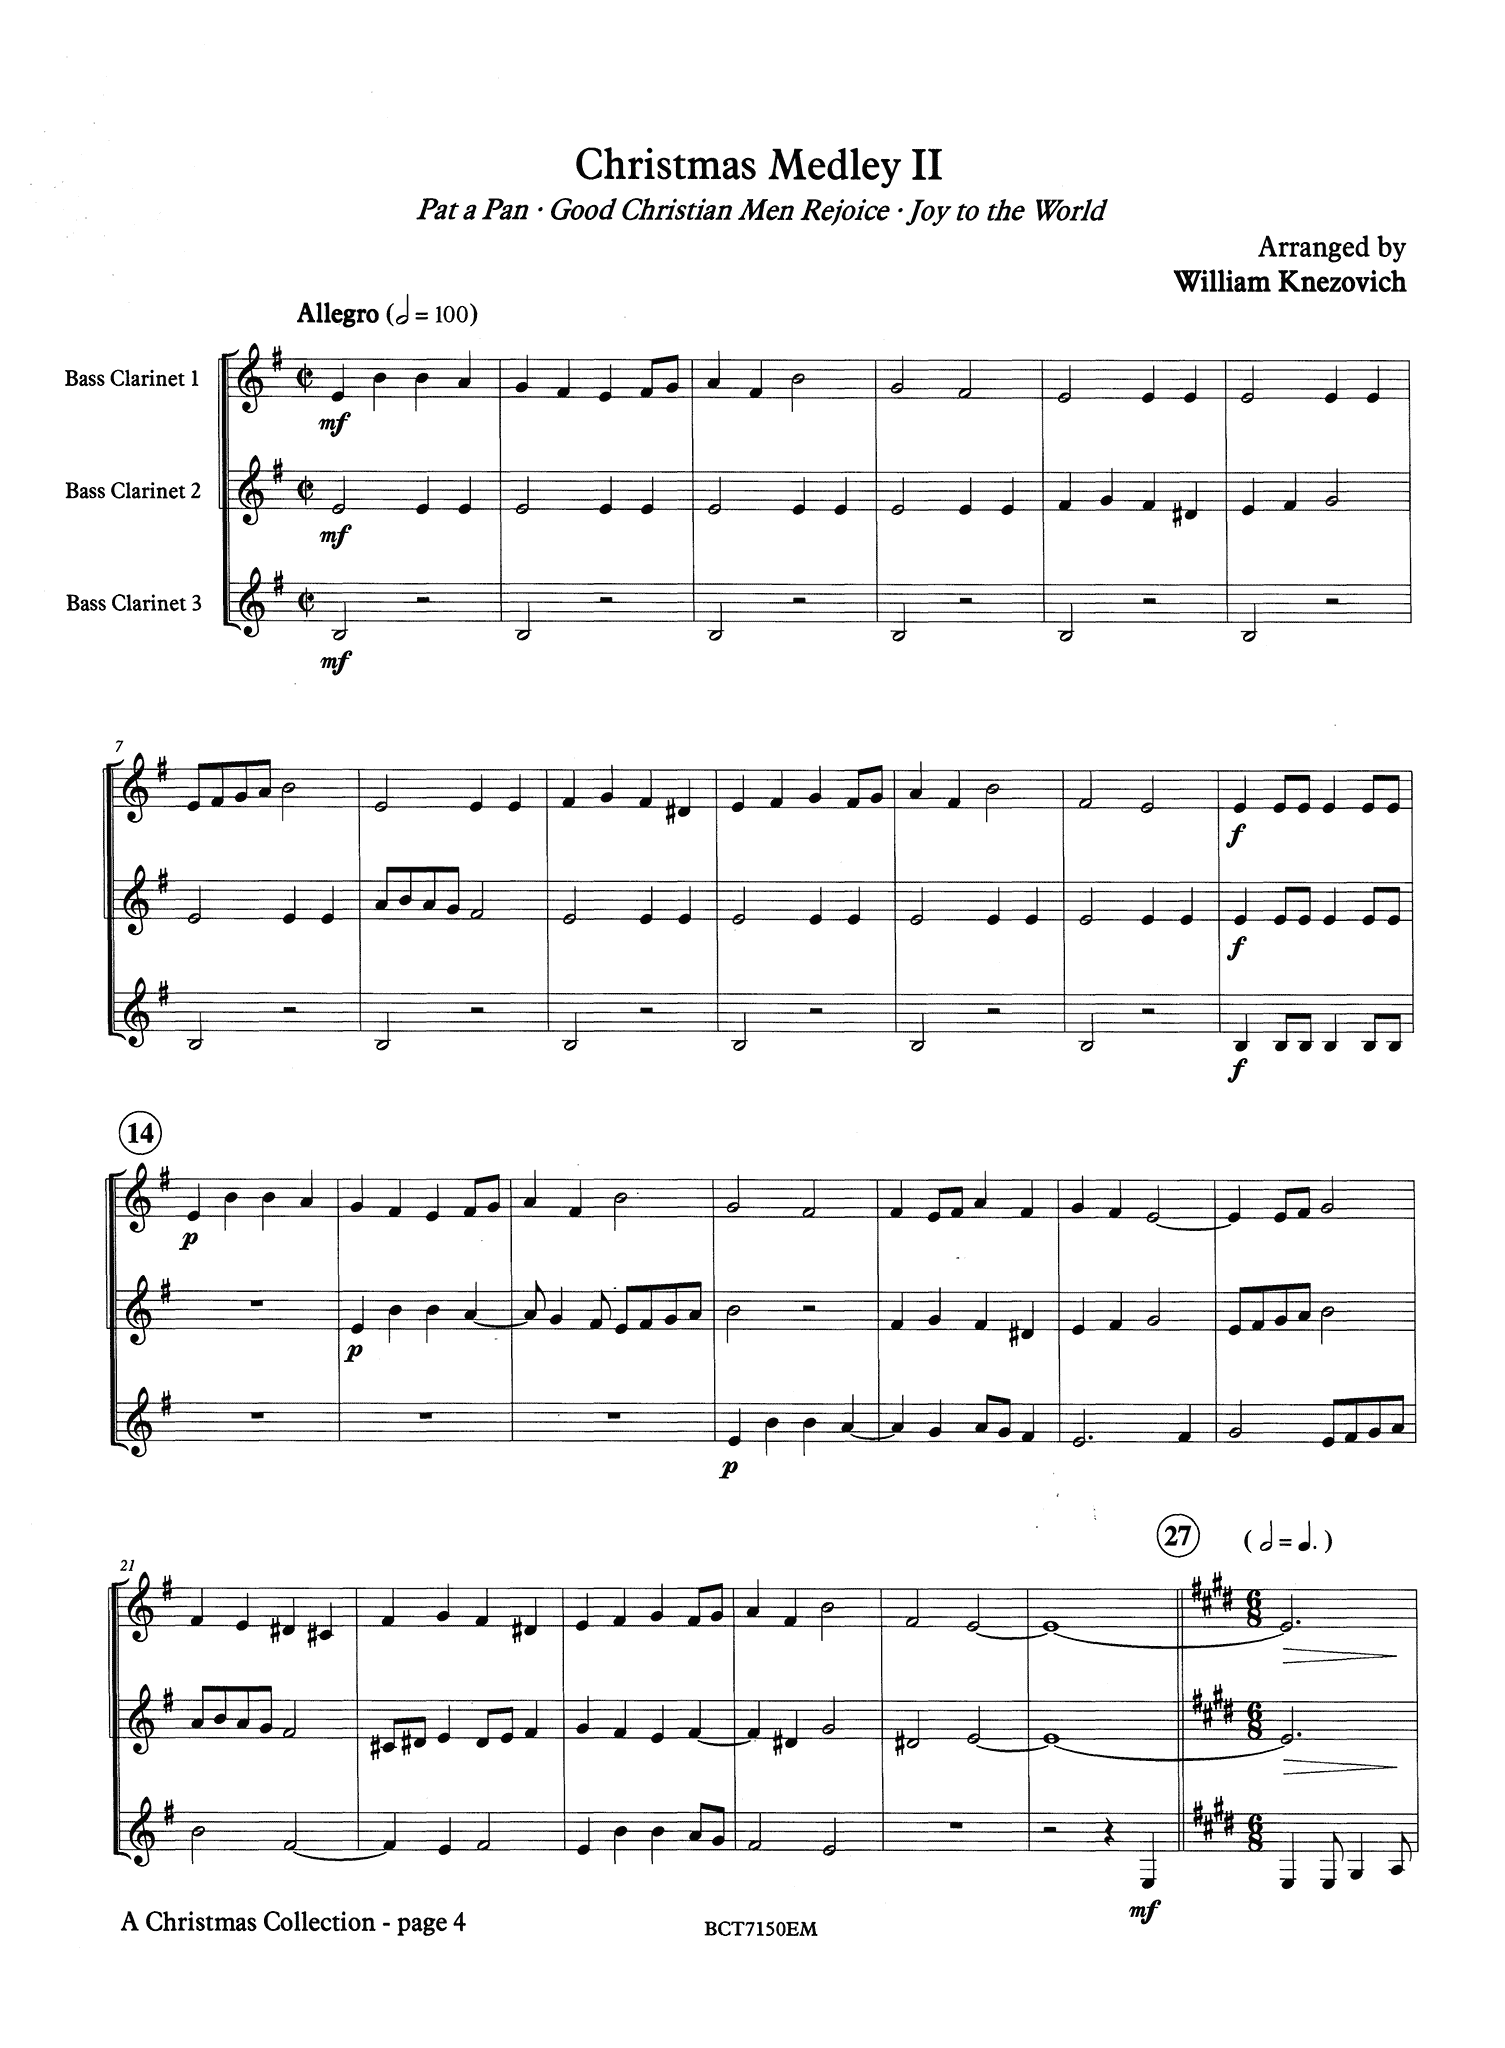 Knezovich Christmas Medley II Score